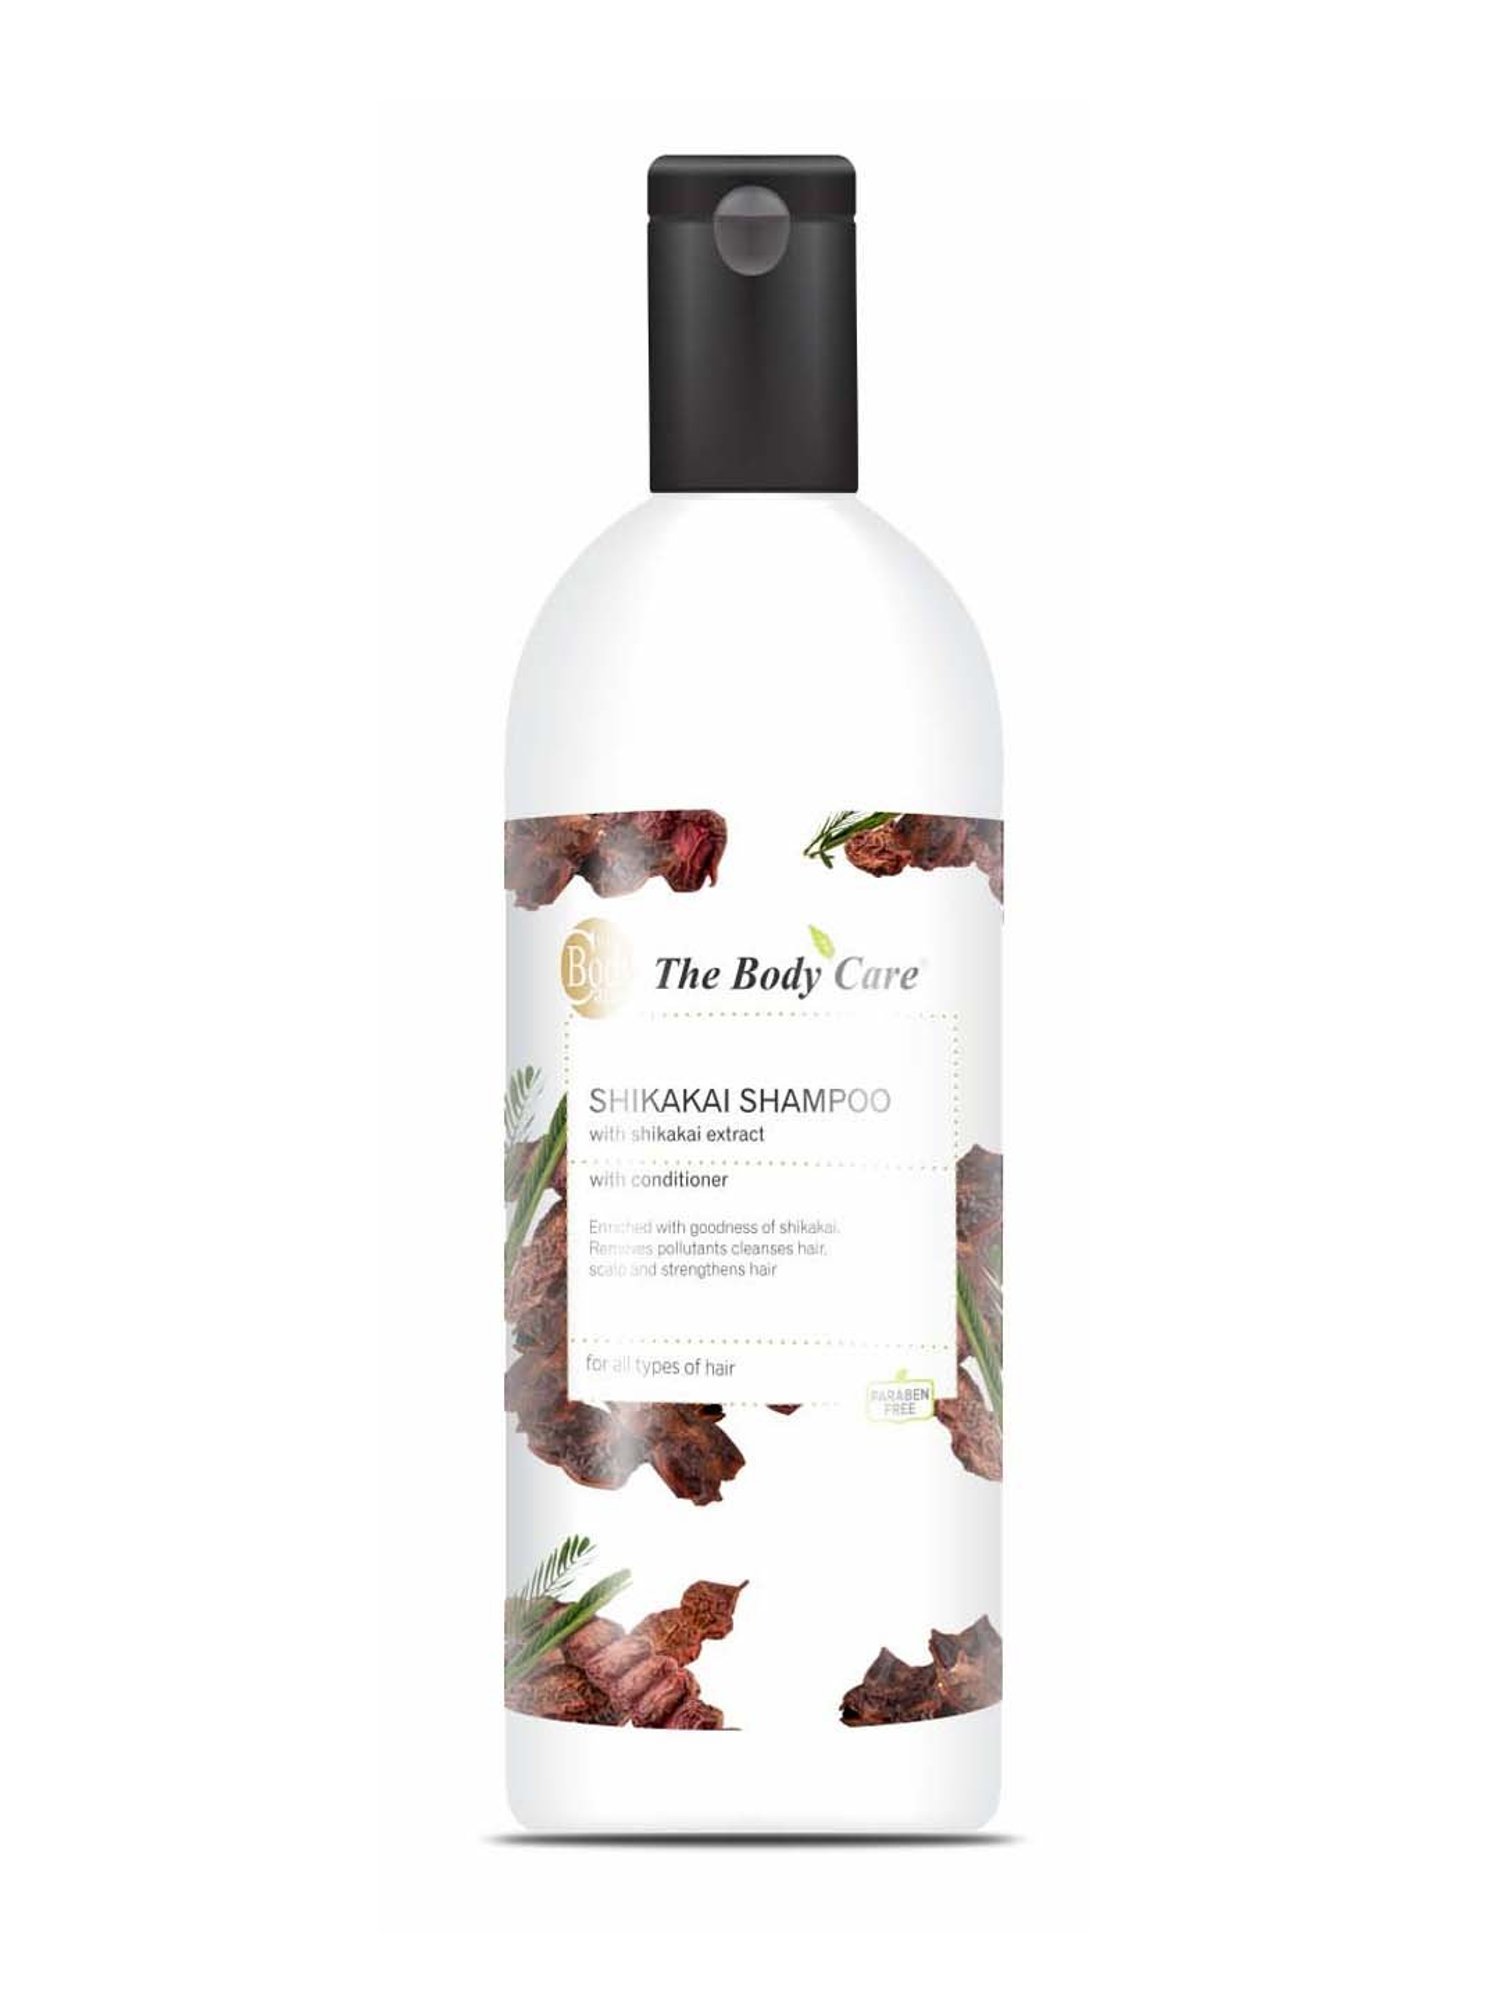 Buy The Body Care Shampoo with Conditioner - 100 ml At Best Price @ Tata CLiQ